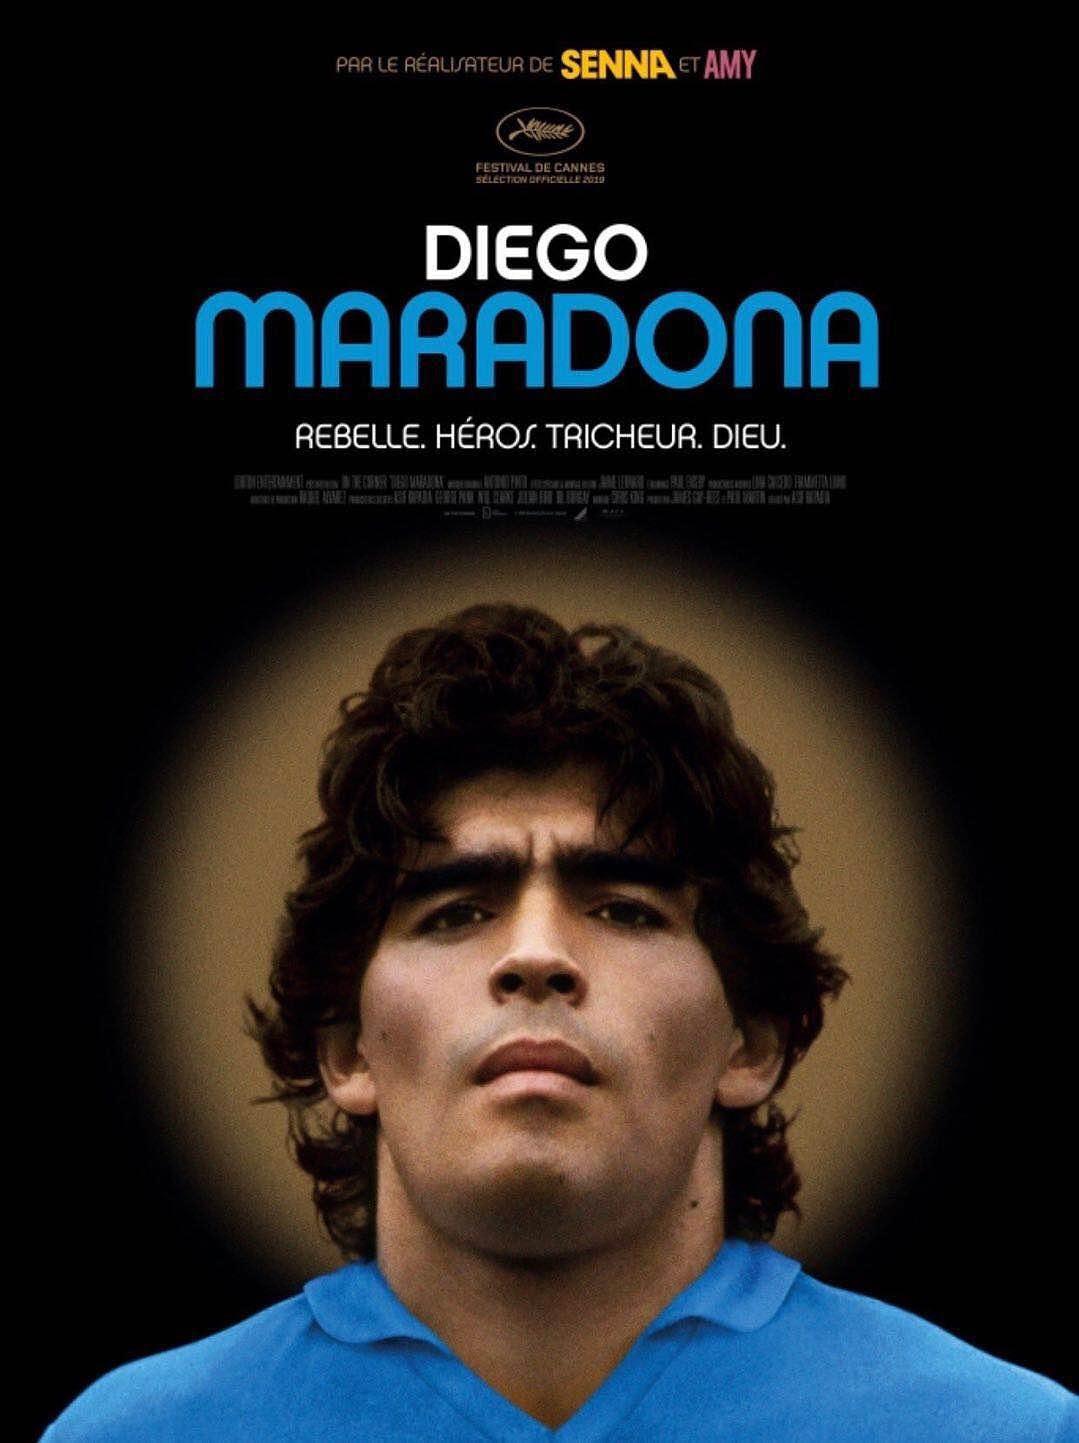  Diego.Maradona.2019.SUBBED.1080p.BluRay.REMUX.AVC.DTS-HD.MA.5.1-FGT 24.87GB-1.png